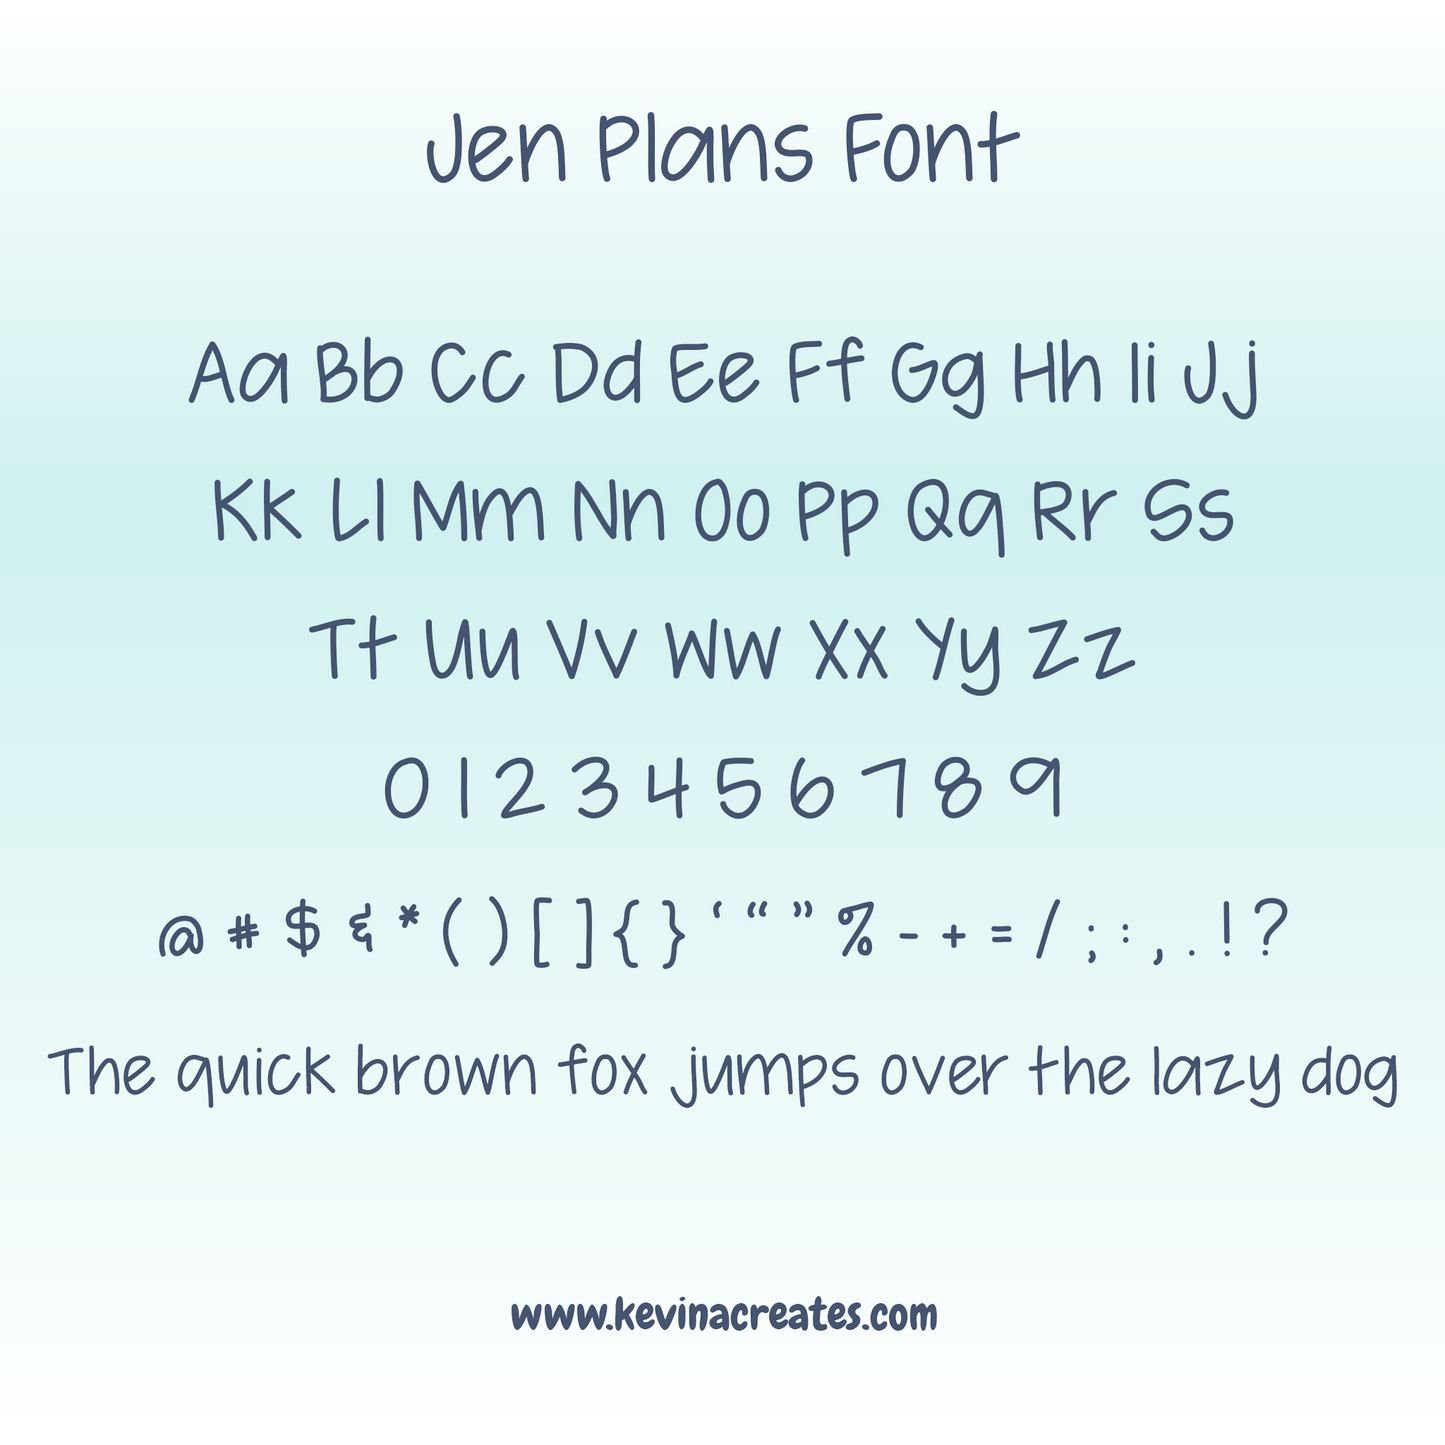 JenPlans CUSTOM Font - Planner Stickers